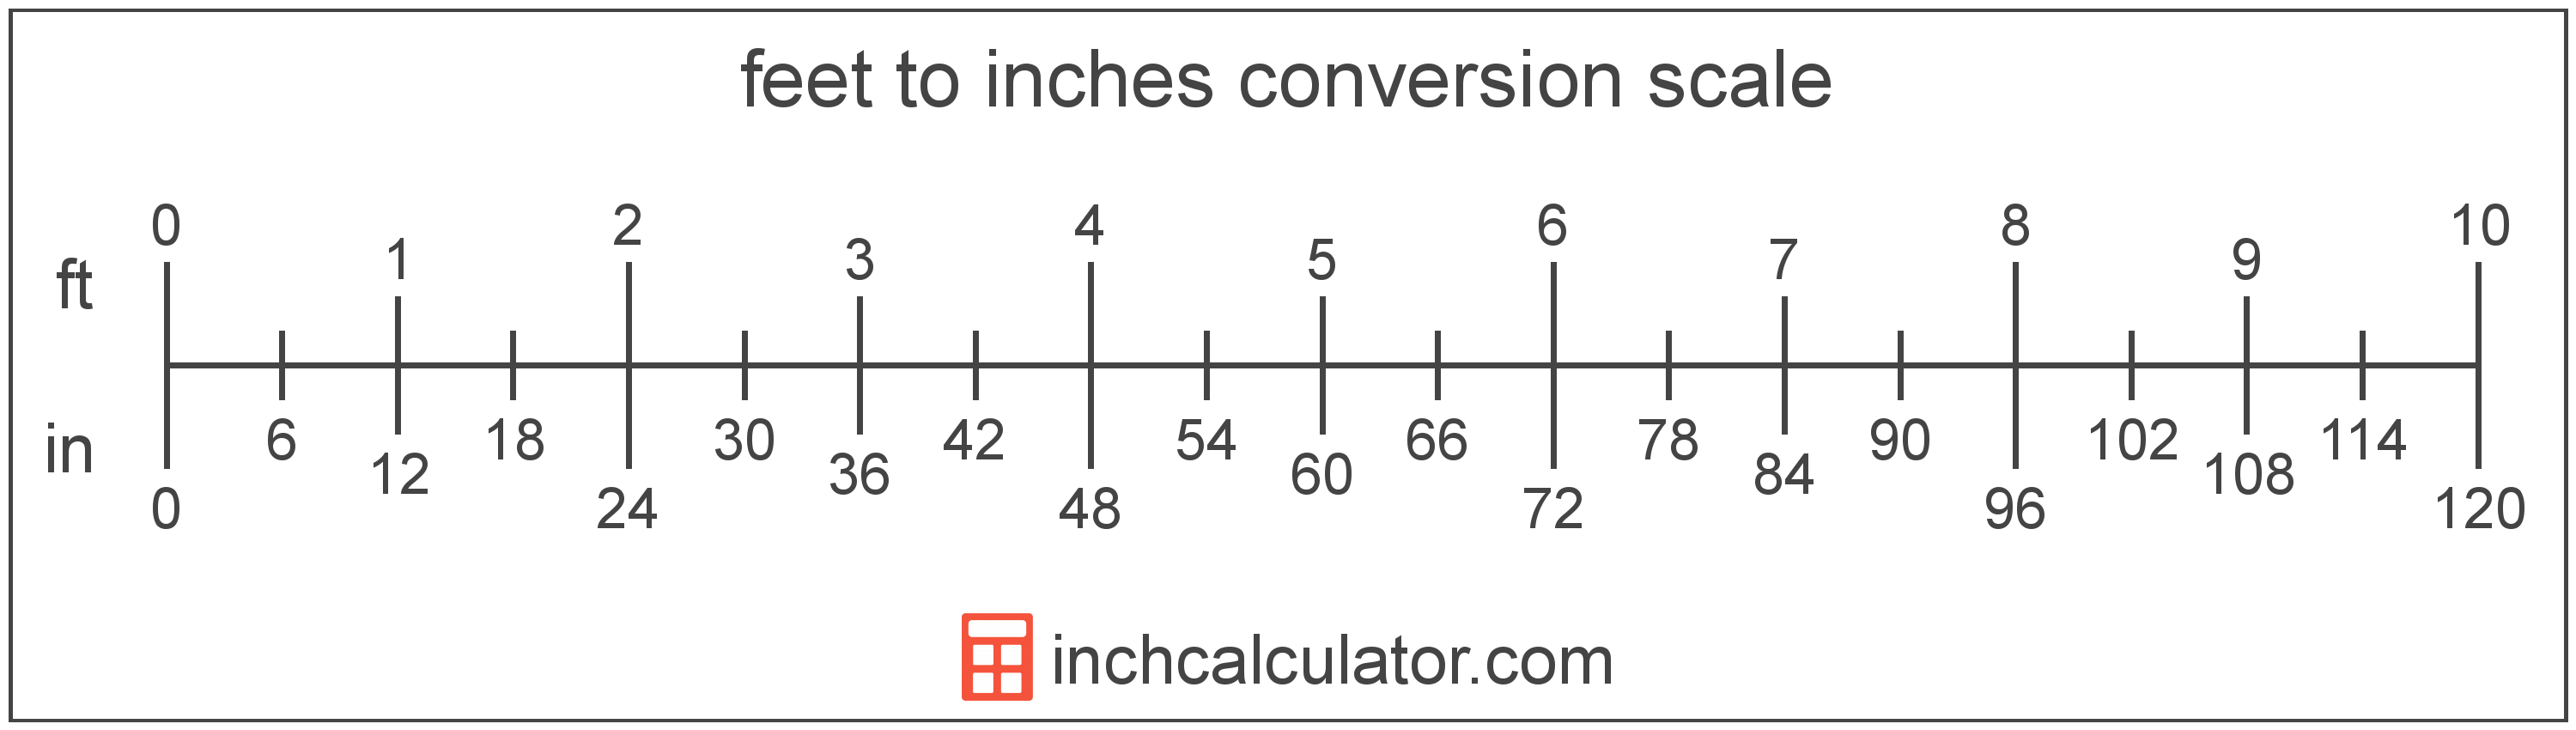 Height Conversion Chart Pdf